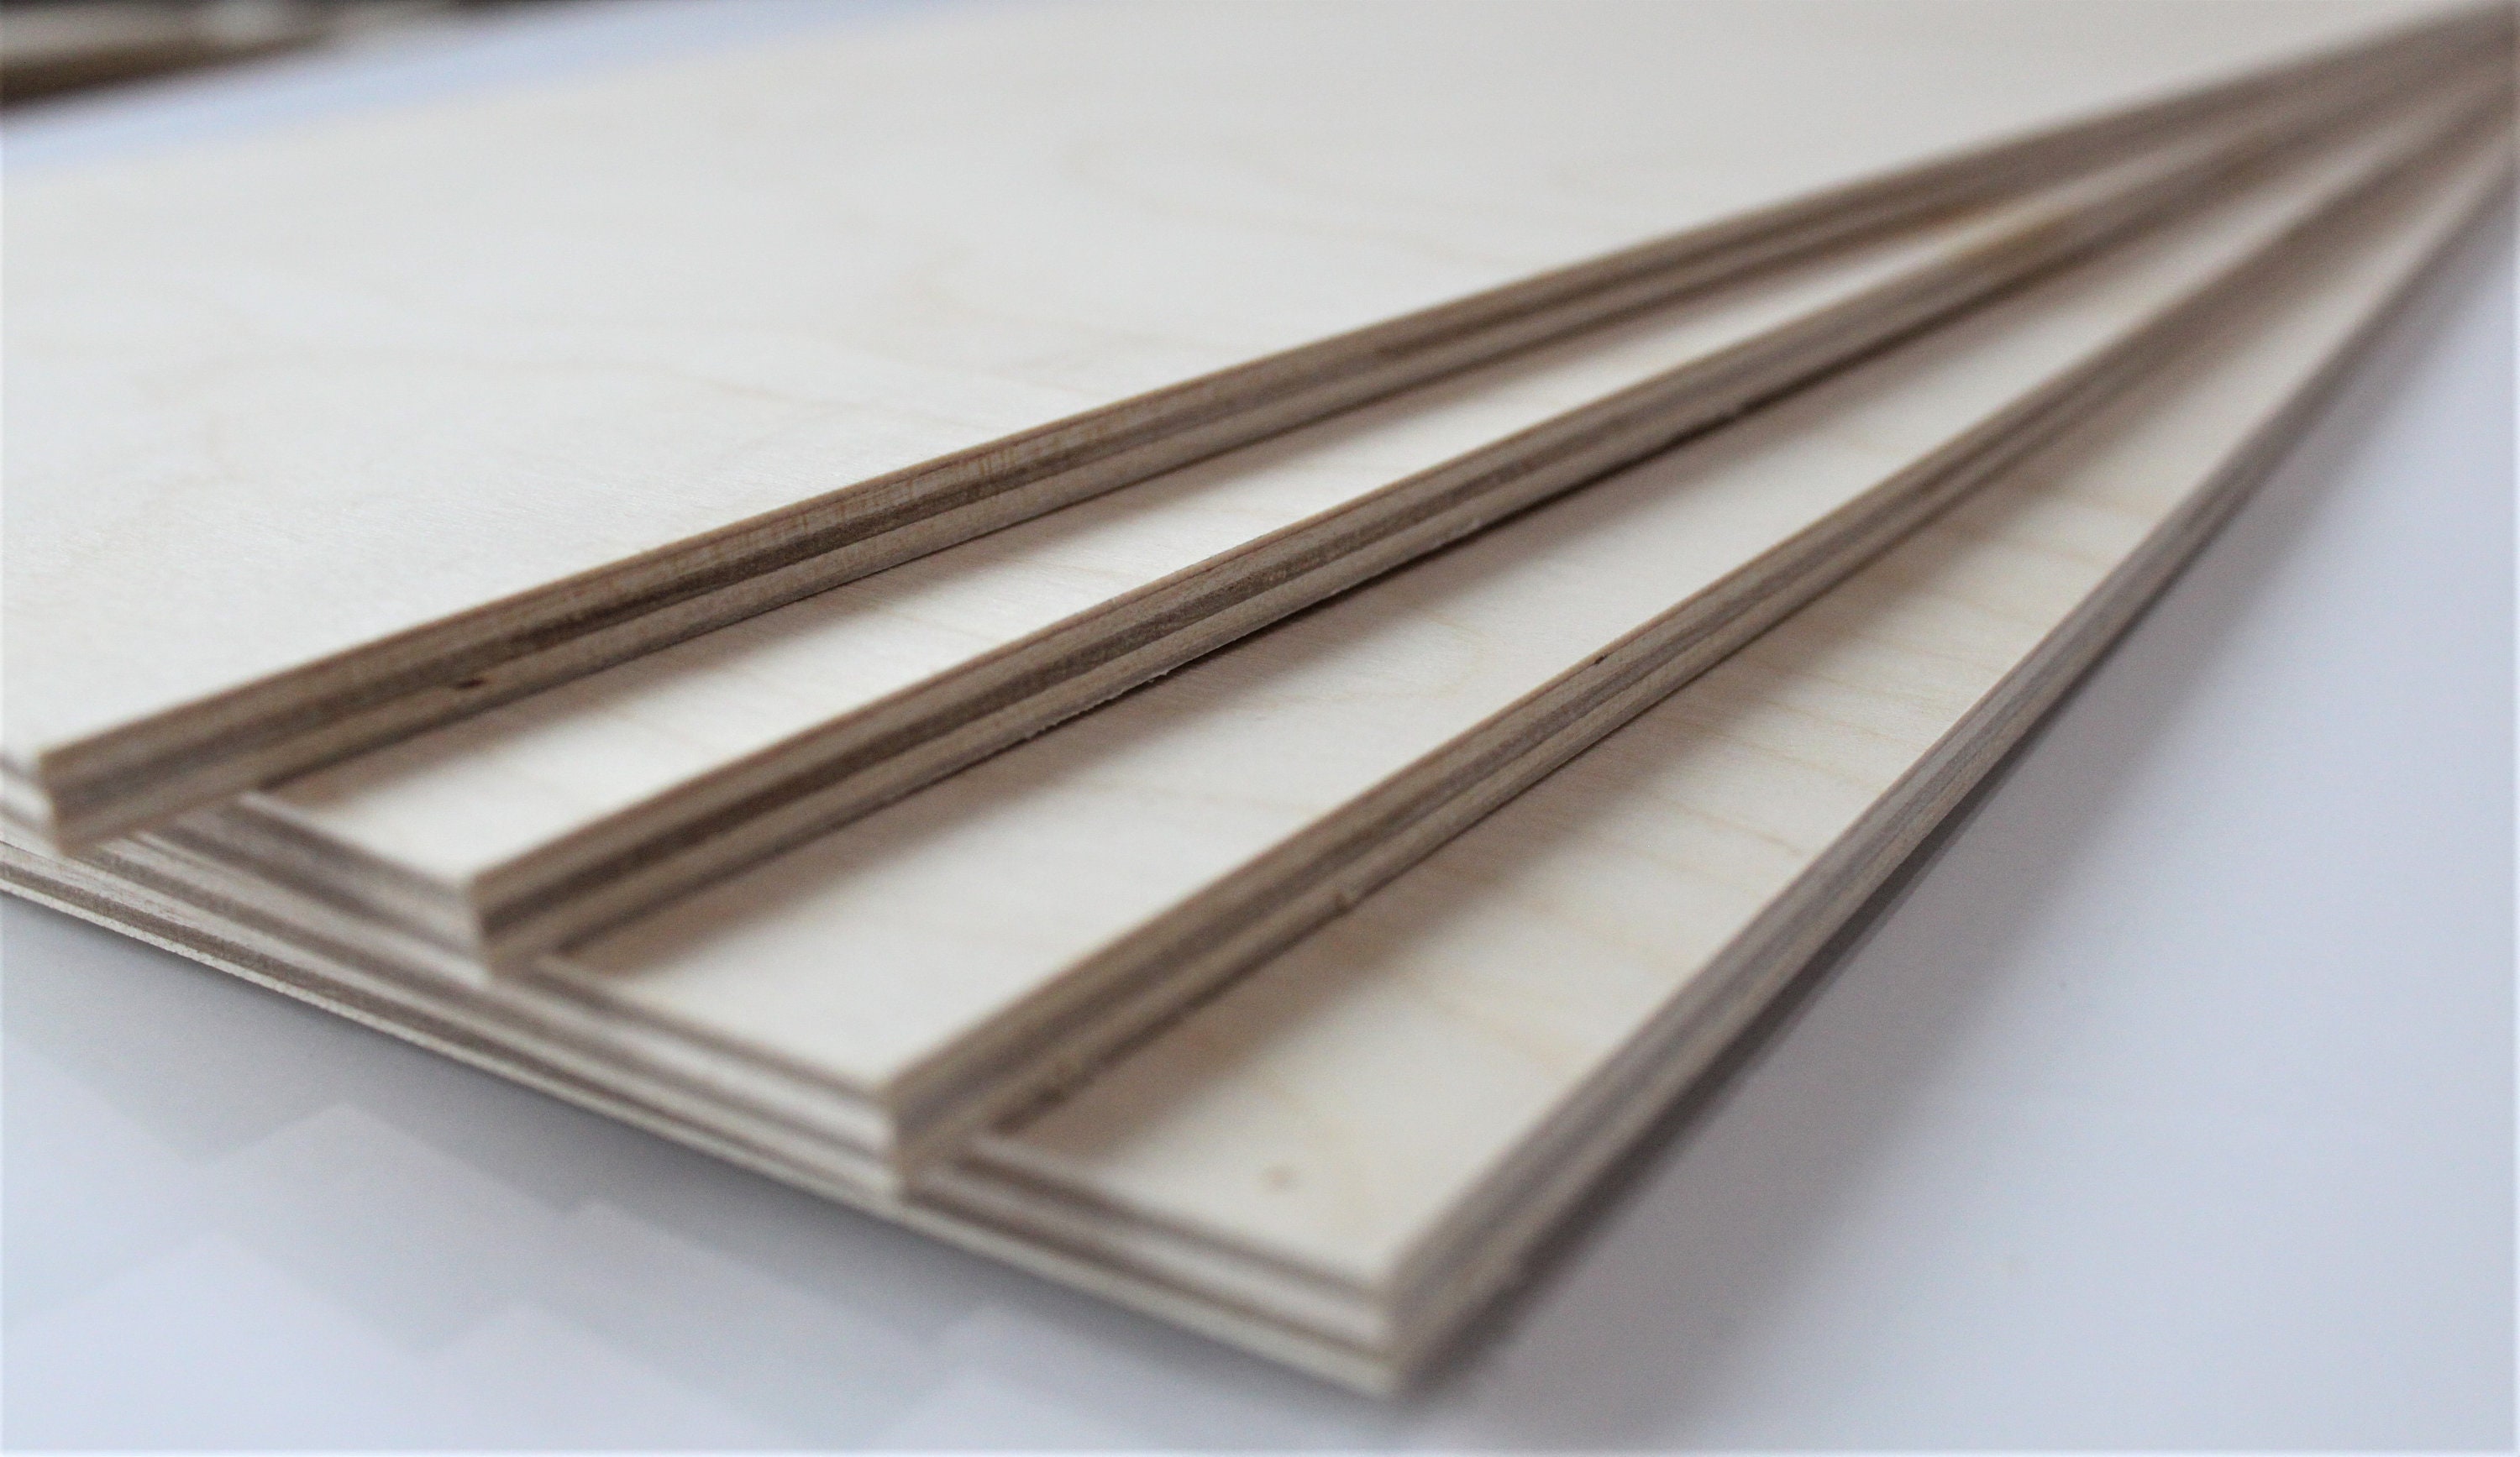 1/8 Baltic Birch Plywood Sheet – BlanksForTheMemory